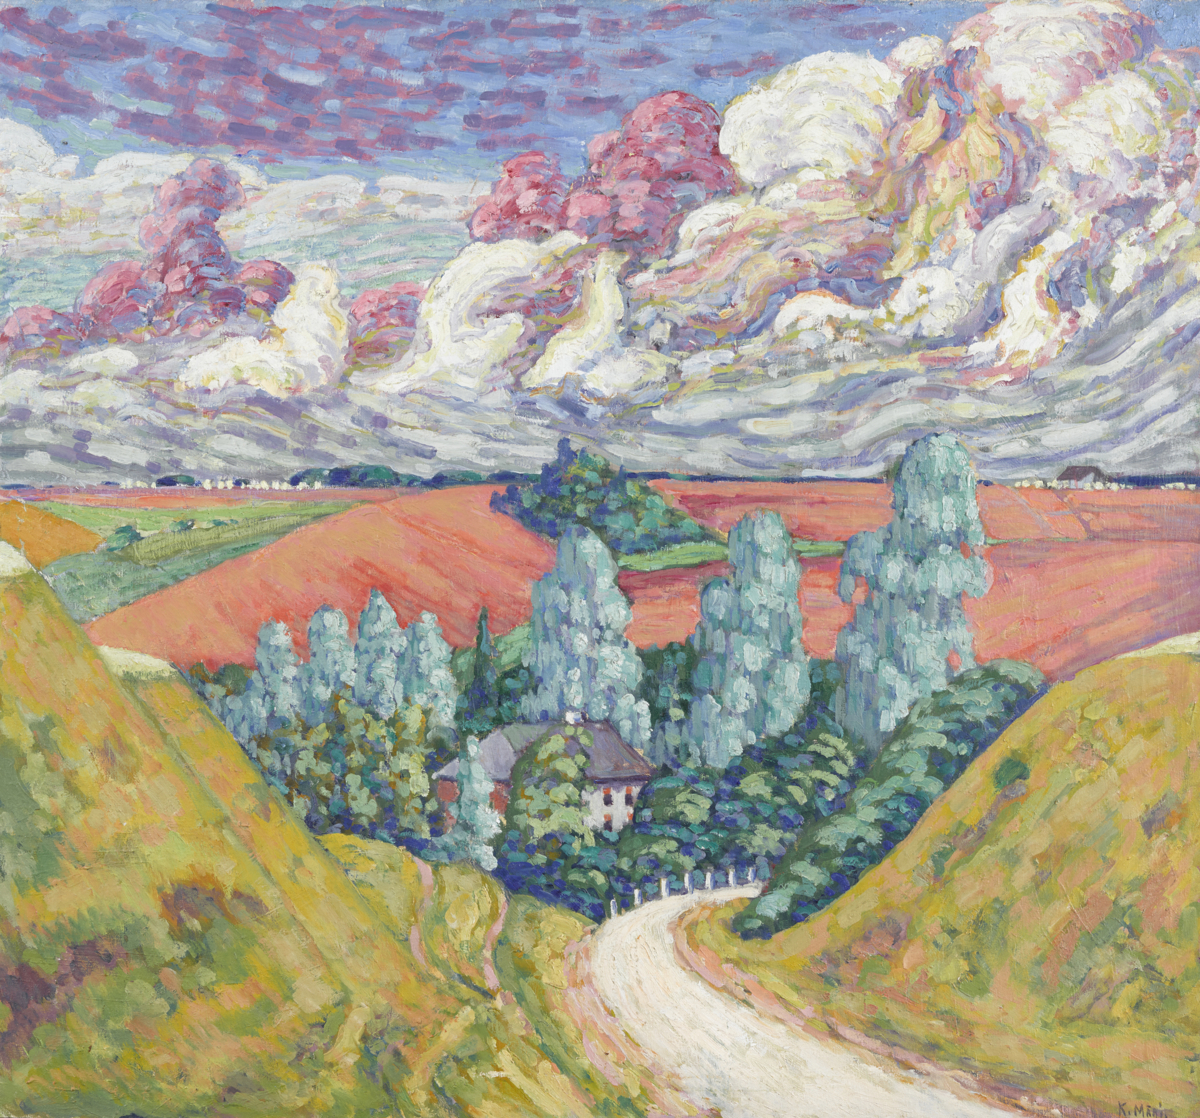 Konrad M&auml;gi, On the Way from Viljandi to Tartu, 1915&ndash;1916, Art Museum of Estonia.&nbsp;

